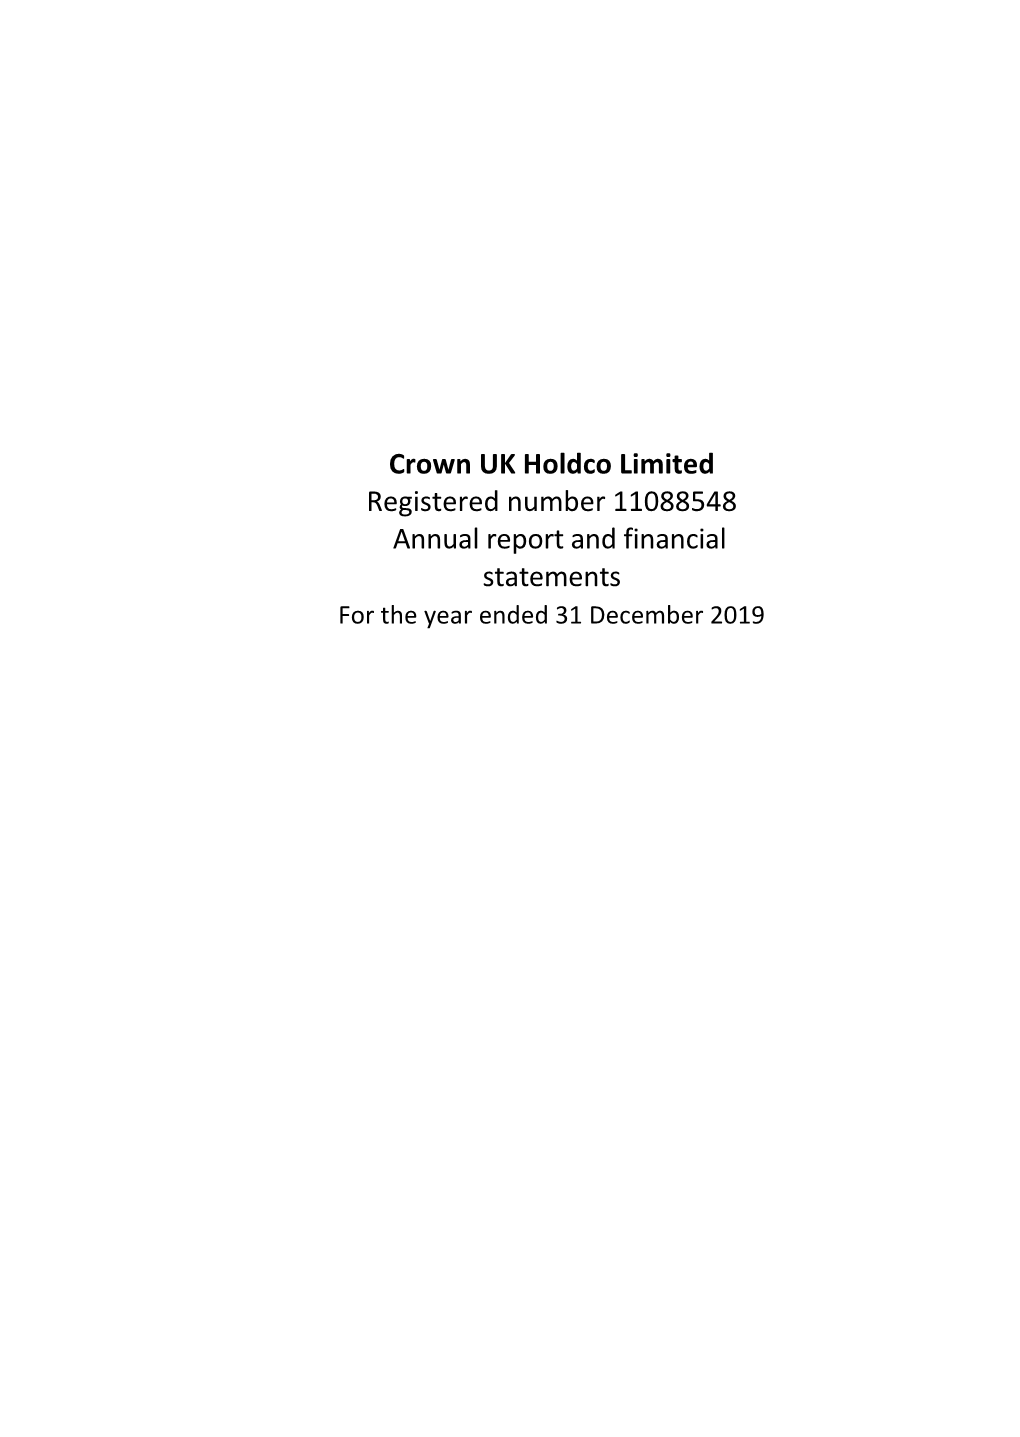 Crown UK Holdco Limited Registered